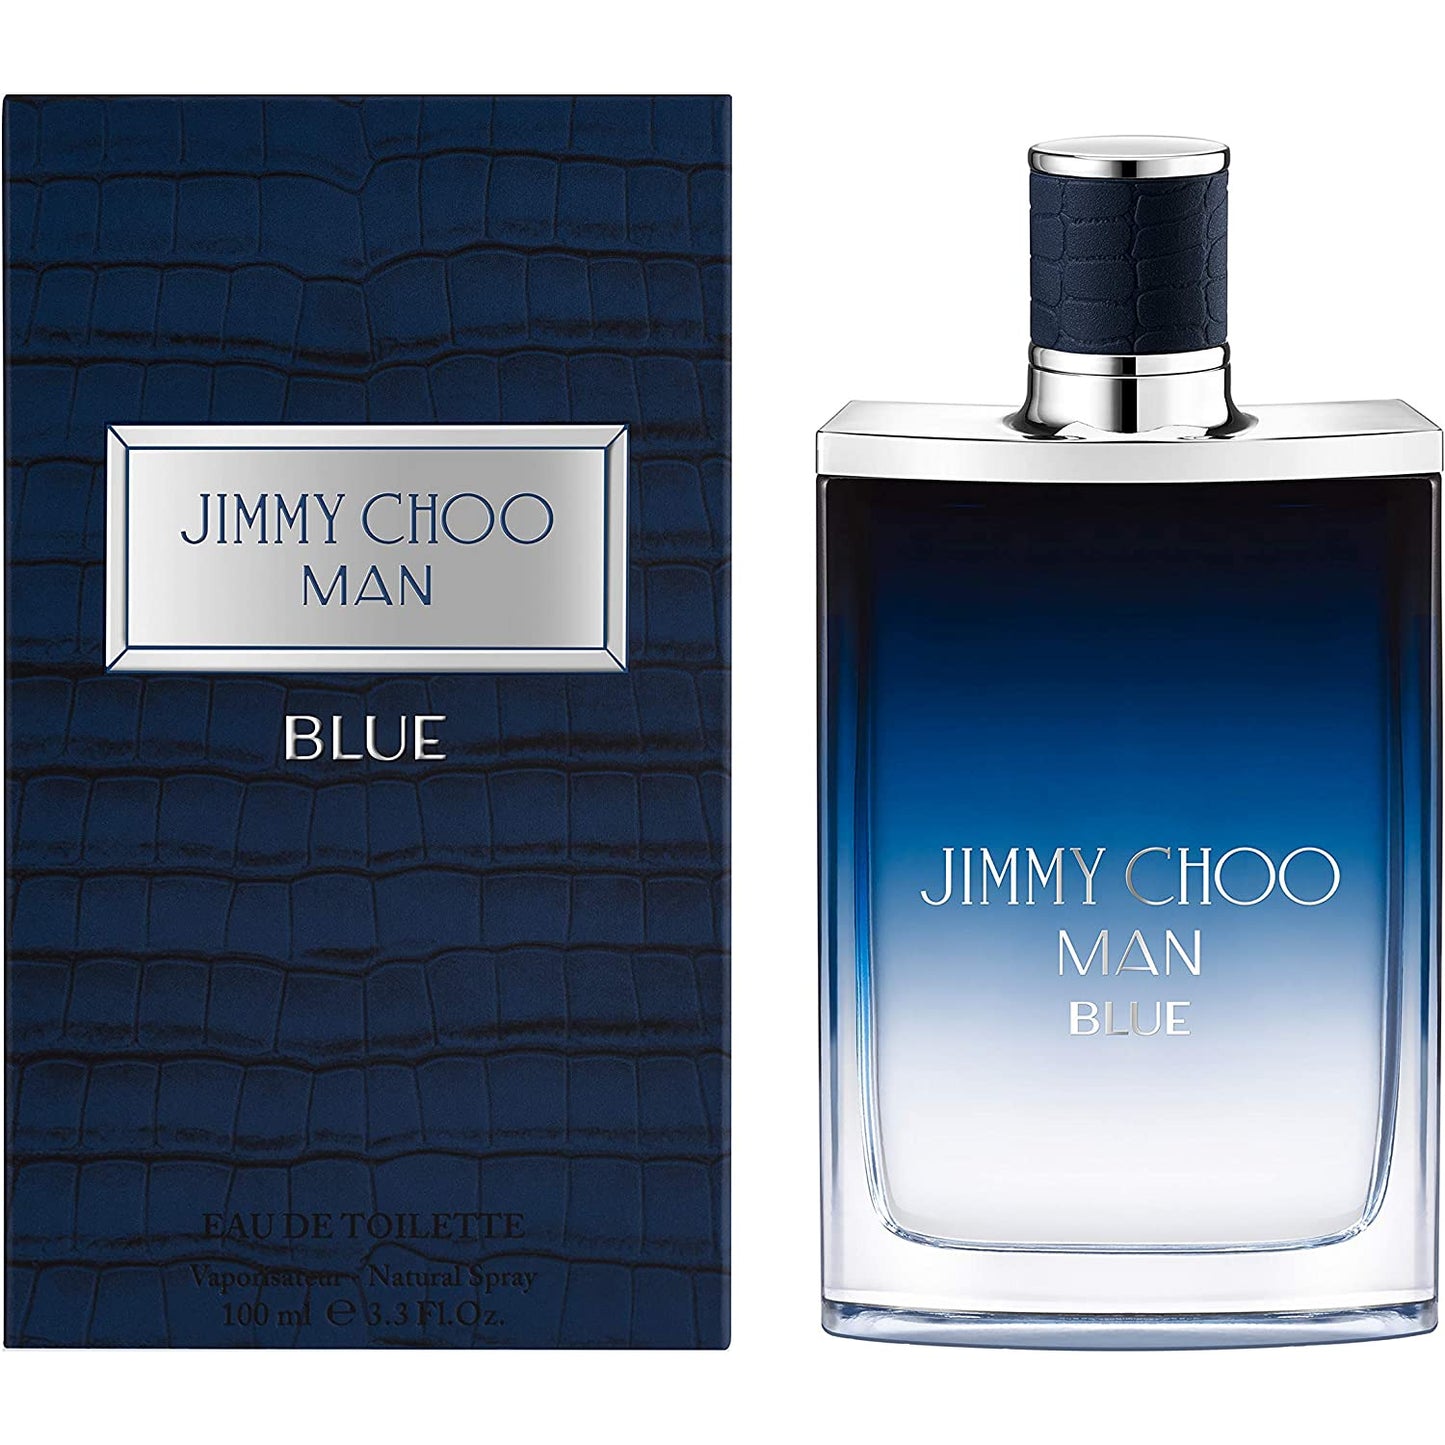 Jimmy Choo Man Blue Perfume Para Hombre 100ml Eau de Toilette